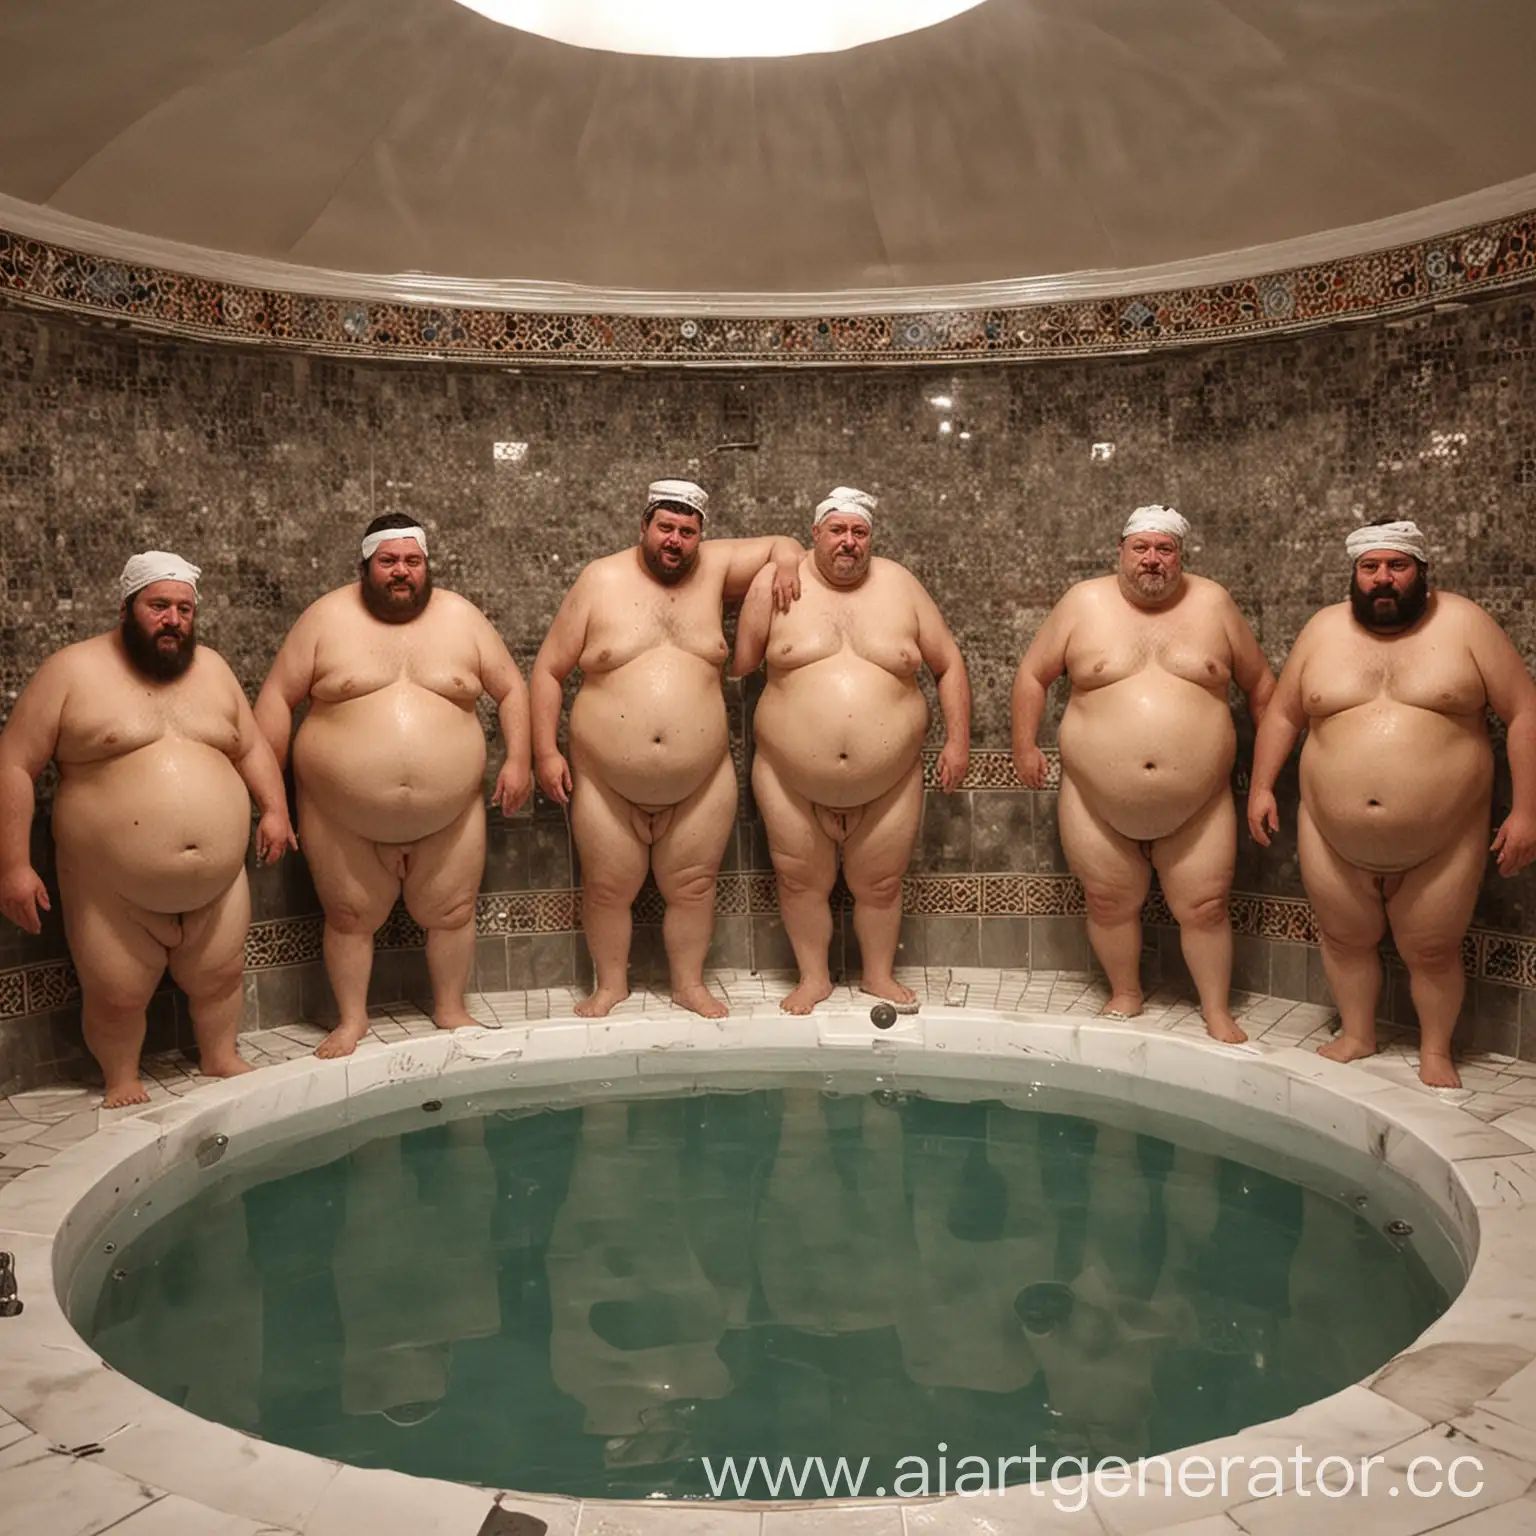 Plump-Gentlemen-Enjoying-Traditional-Turkish-Bath-Experience